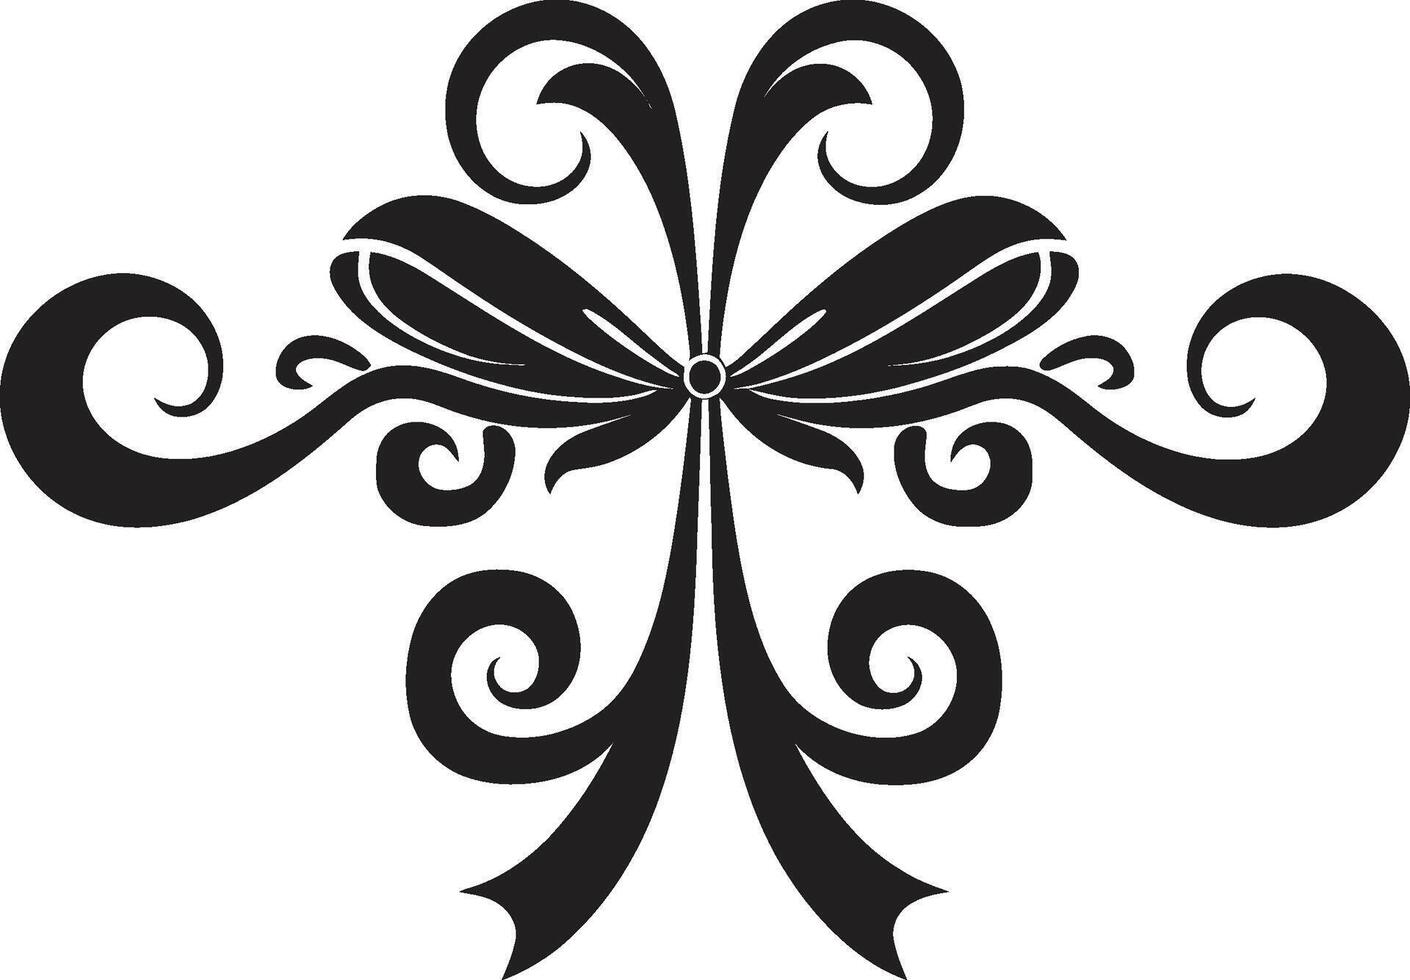 Exquisite Detailing Black Ribbon Emblem Sophisticated Charm Decorative Ribbon vector